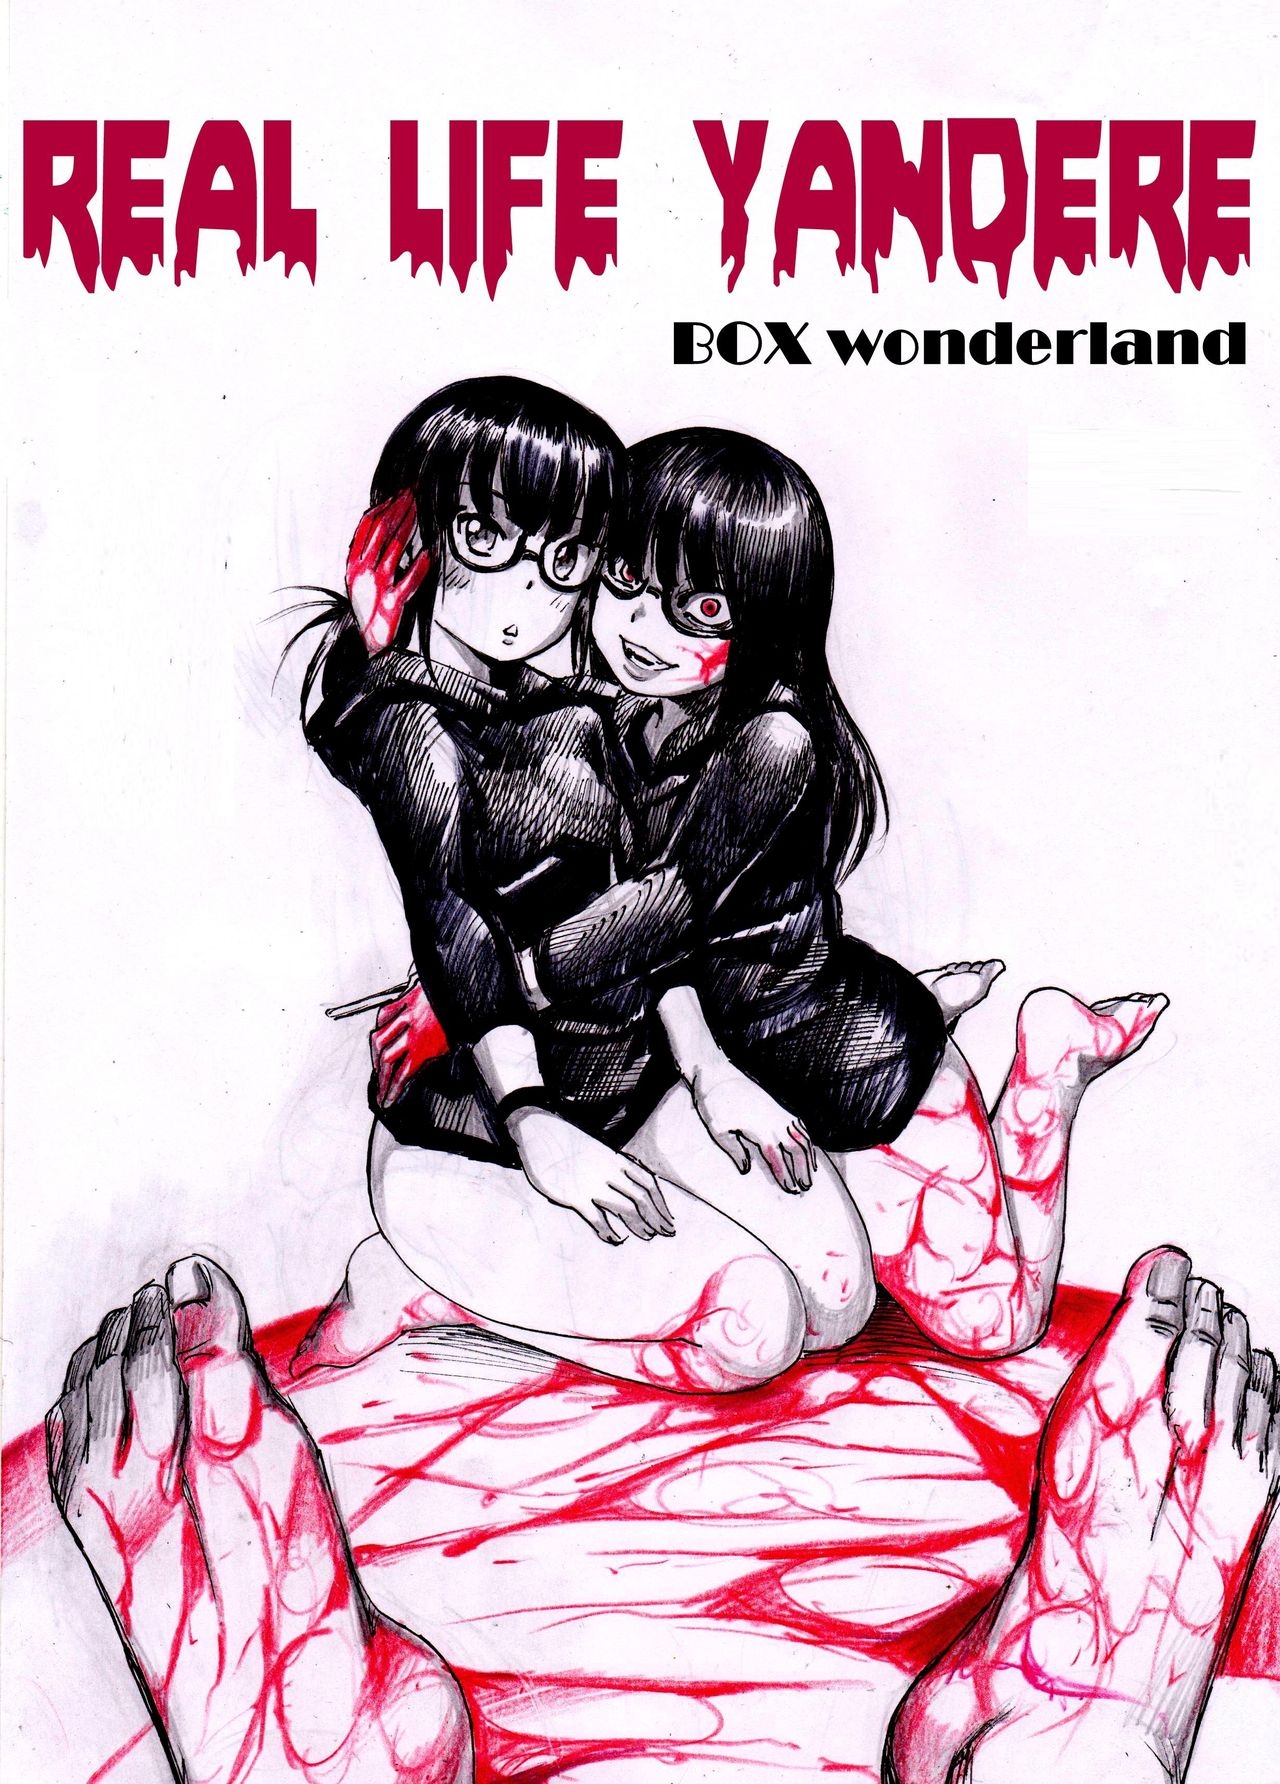 Artist ❤️❤️ box wonderland 115